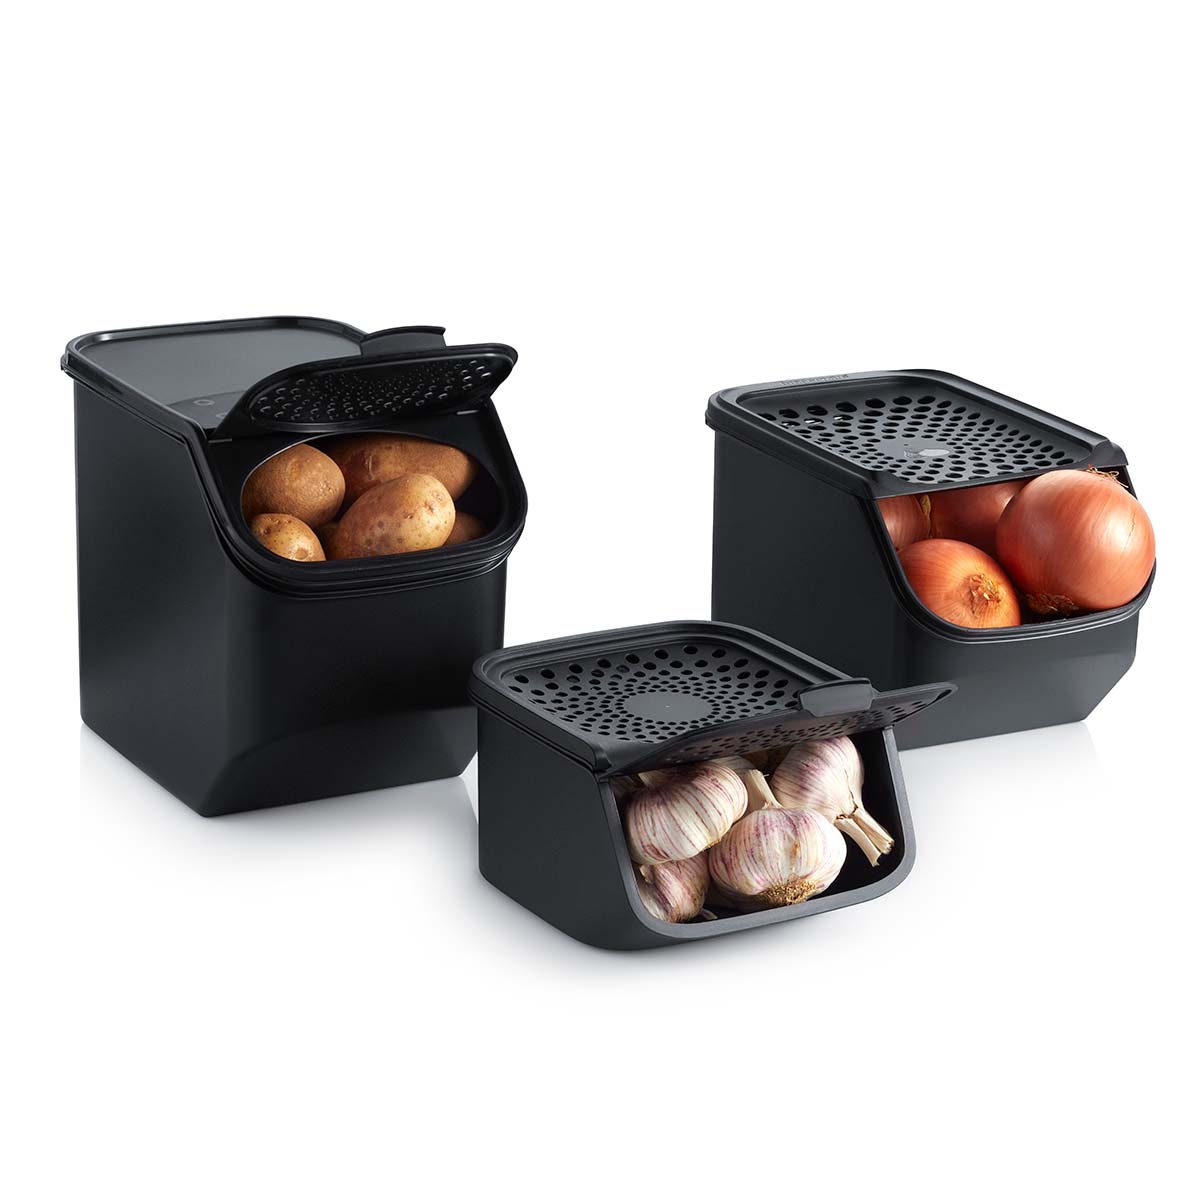 Tupperware Black Modular Mate Potato Smart Container 